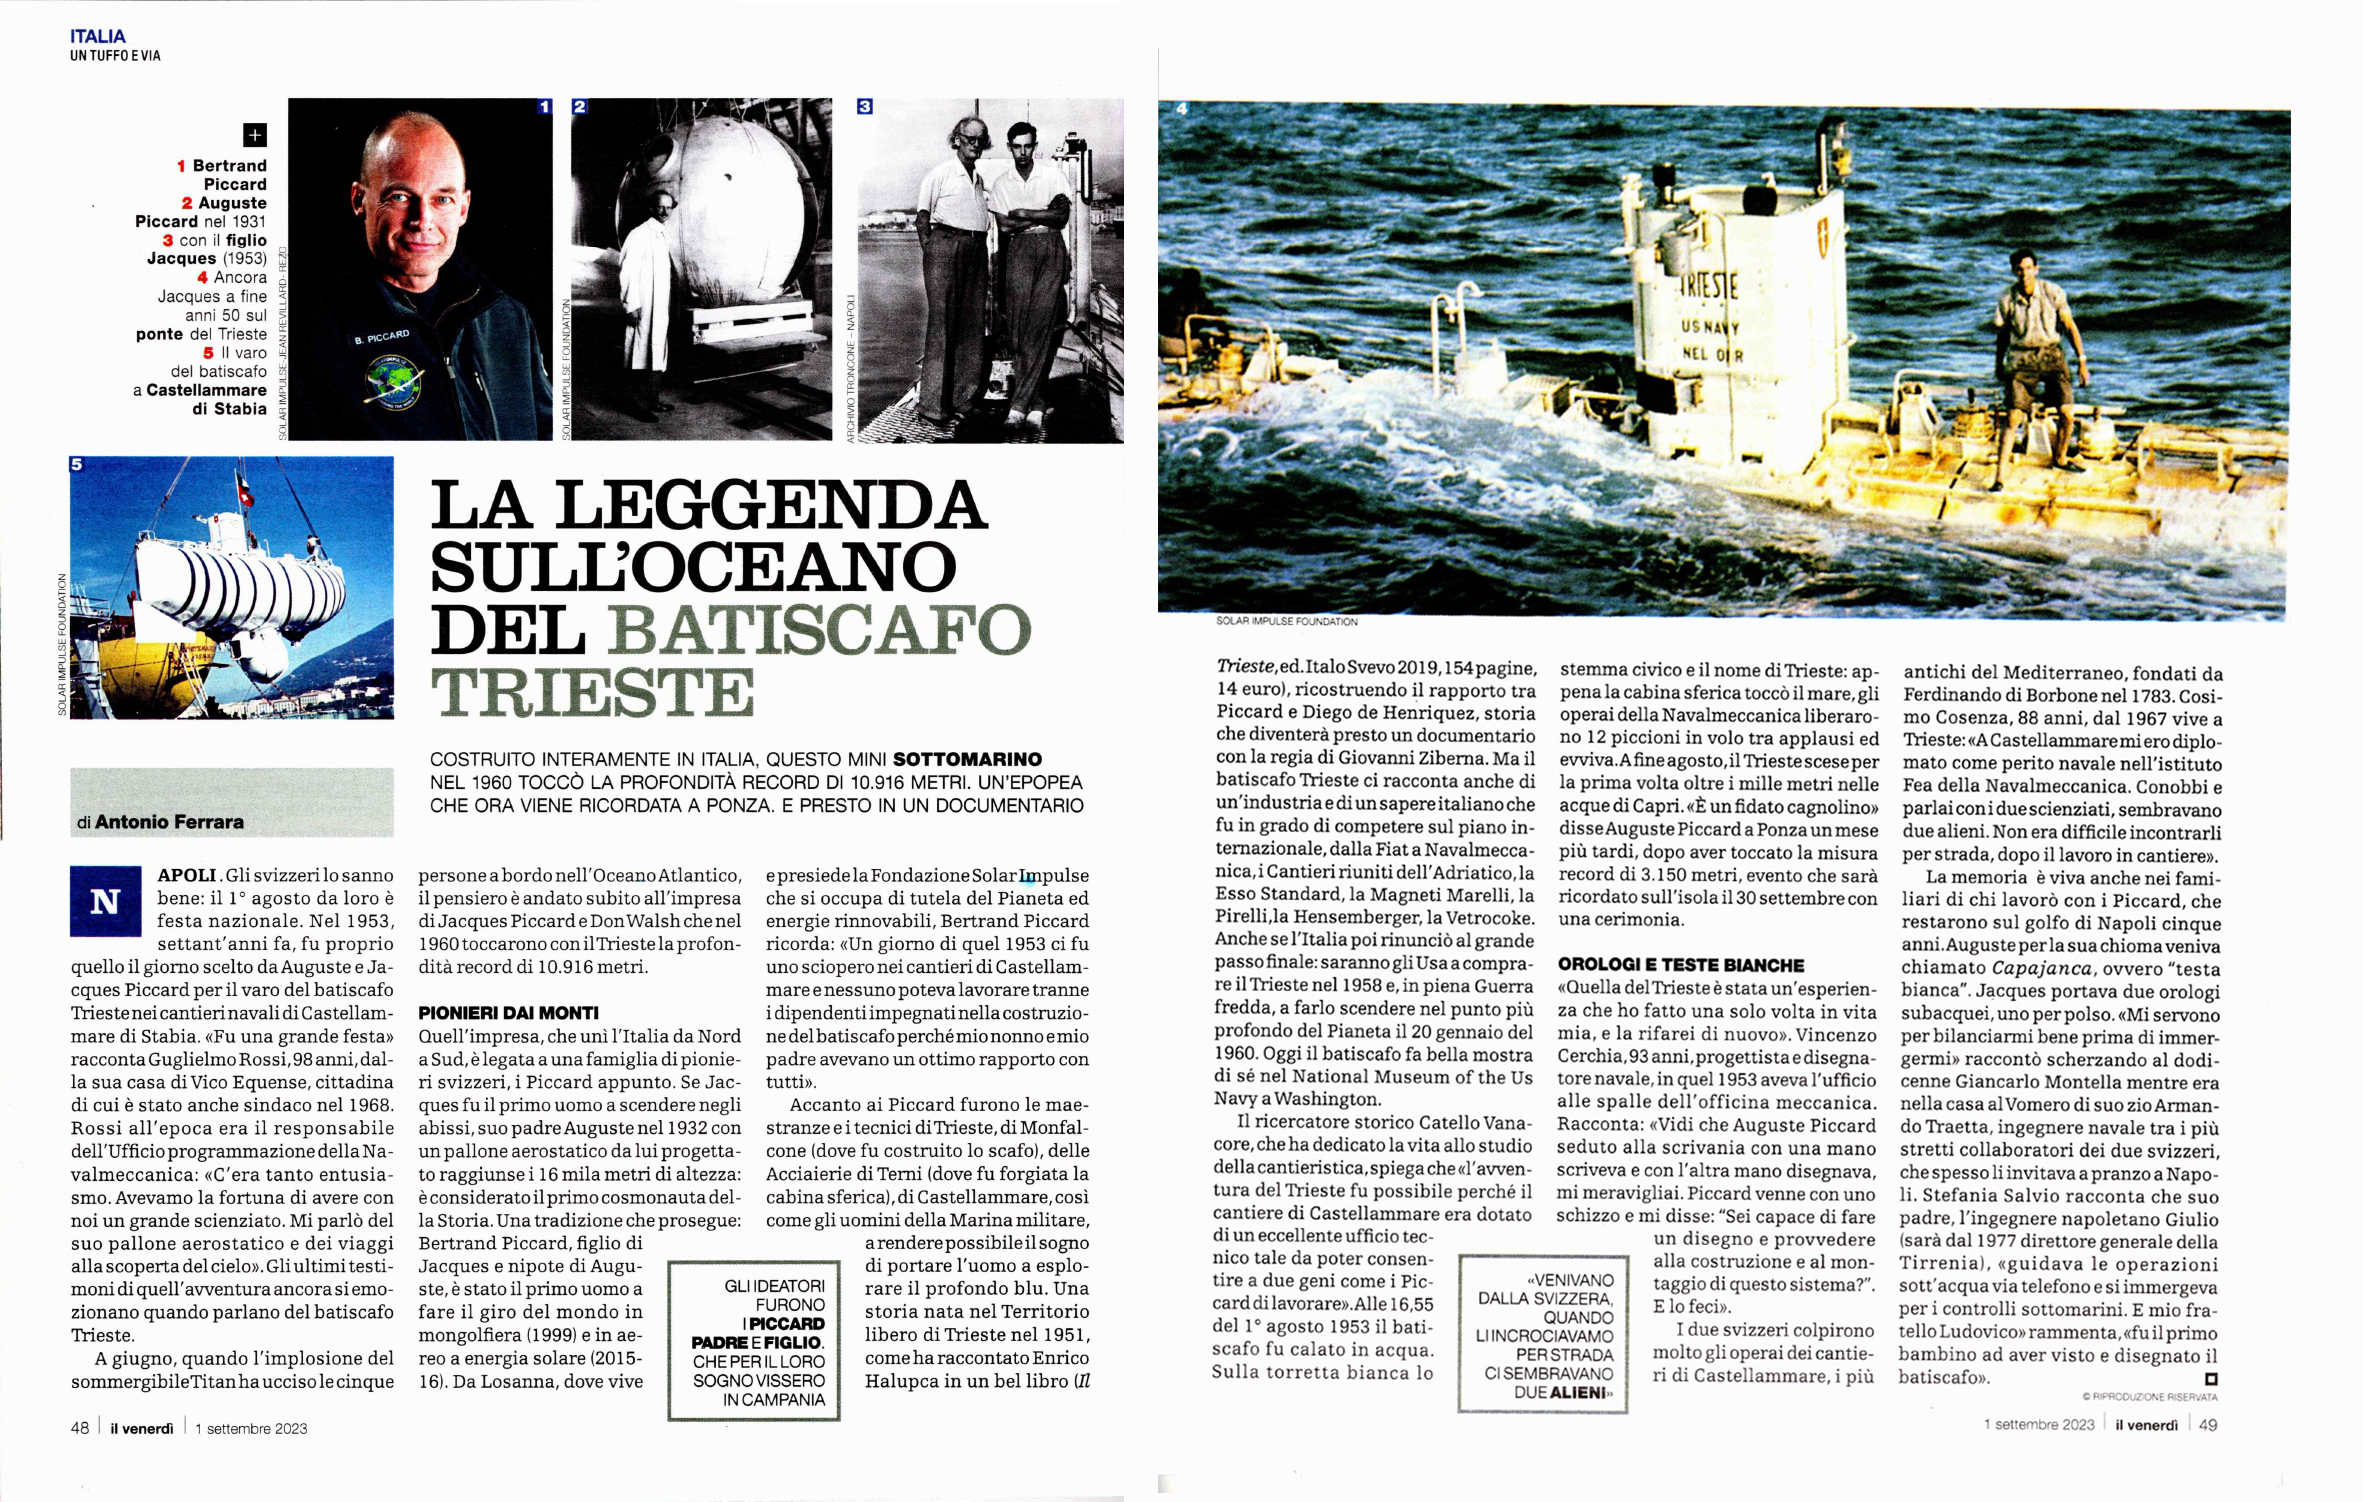 Ponza ricorda l'impresa del batiscafo Trieste - MetroNews